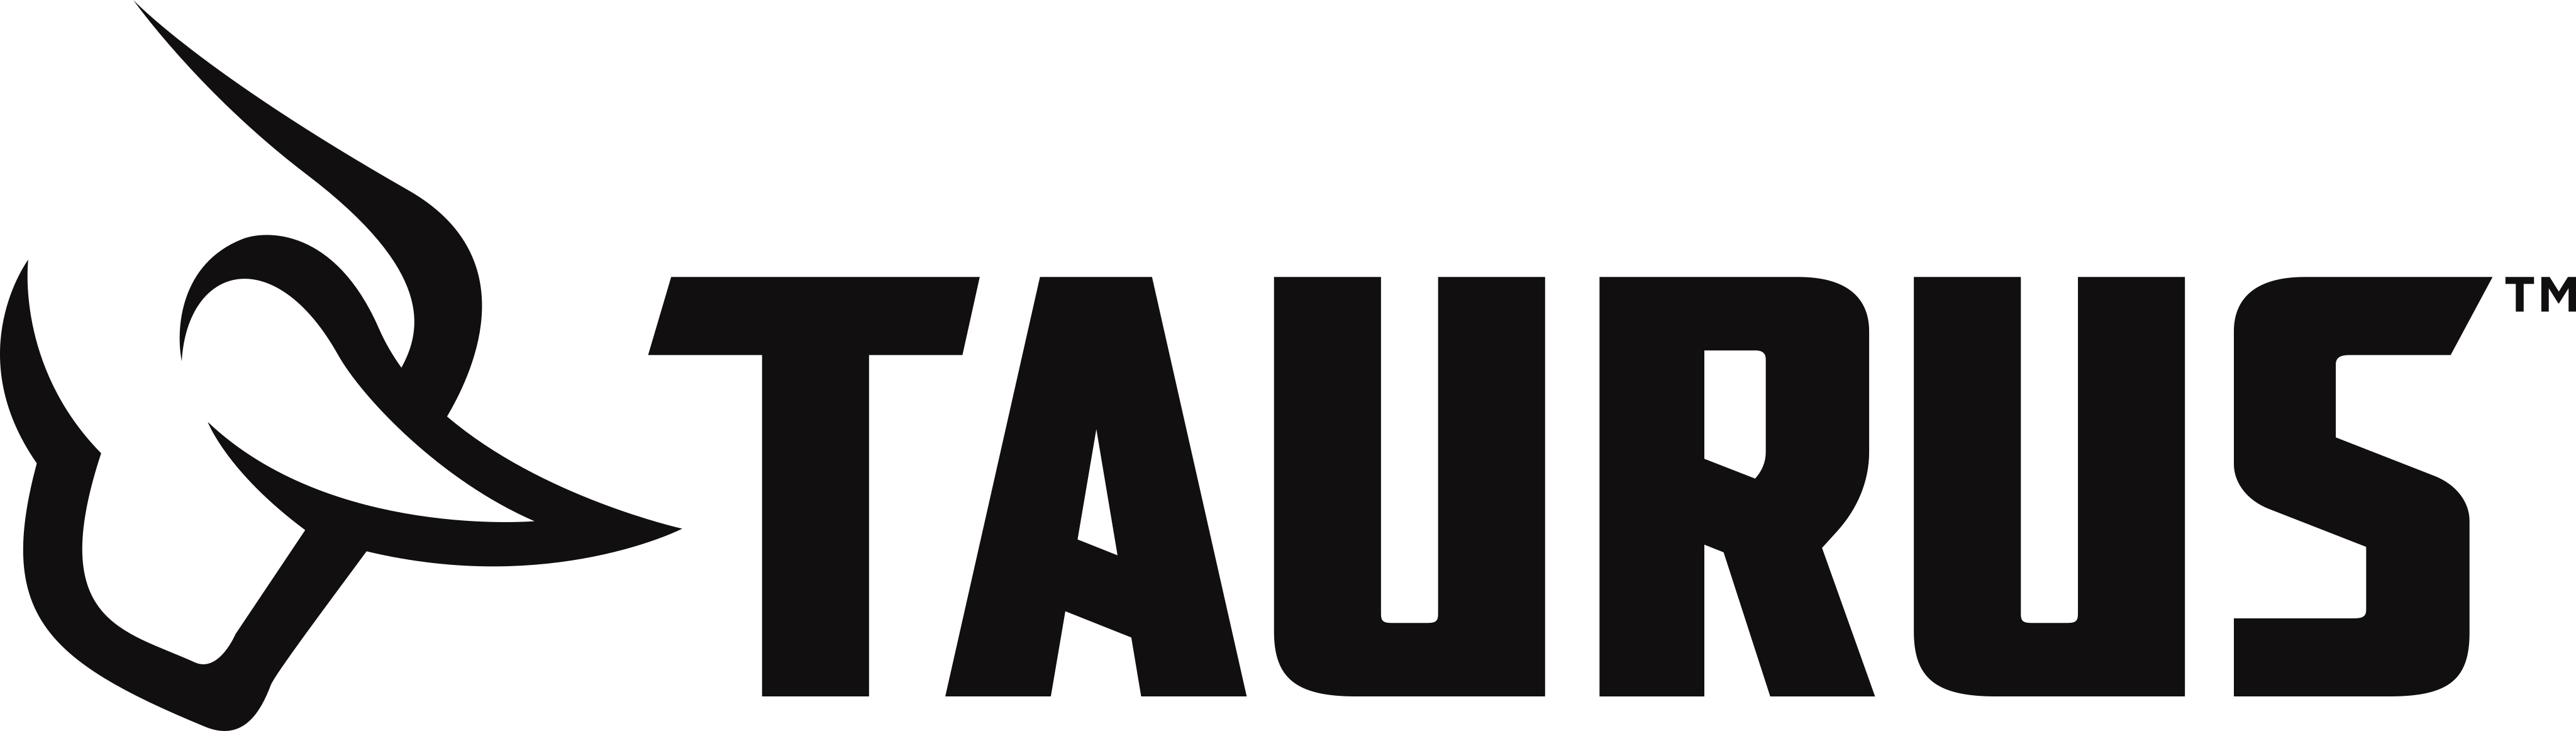 taurus-logo-2-1